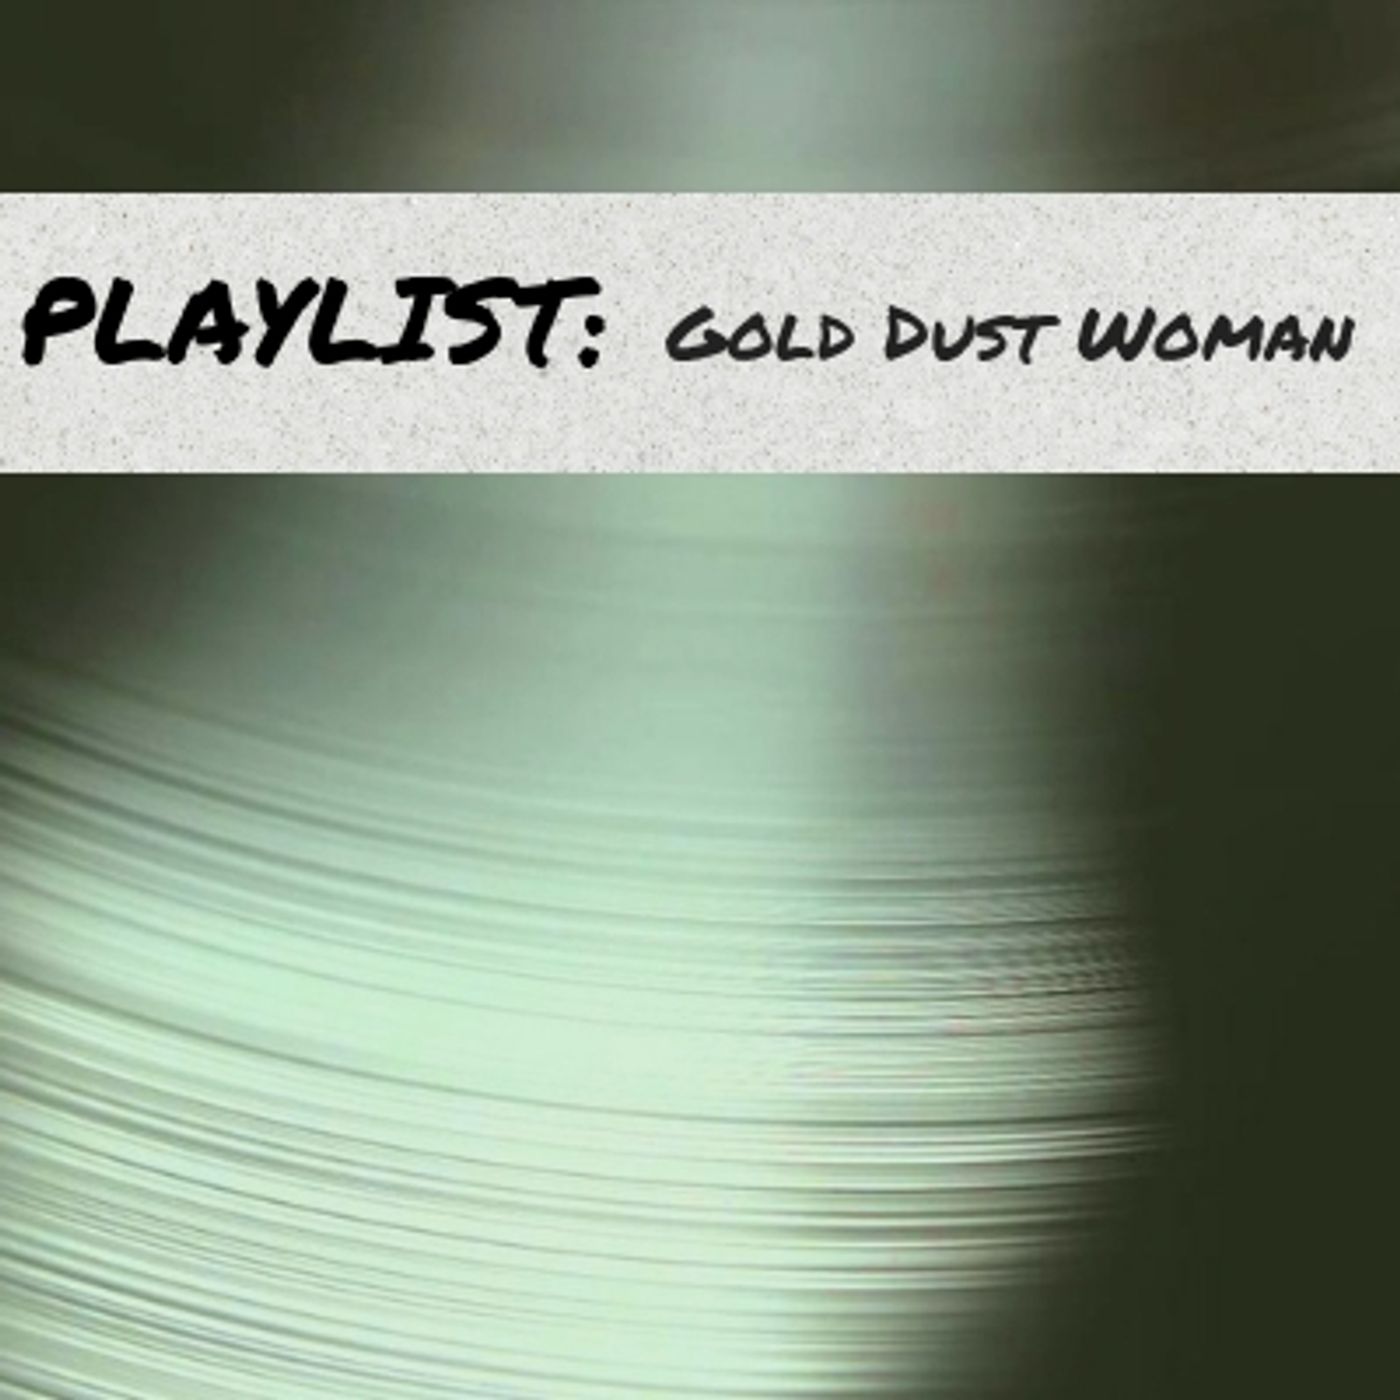 5.4 Gold Dust Woman